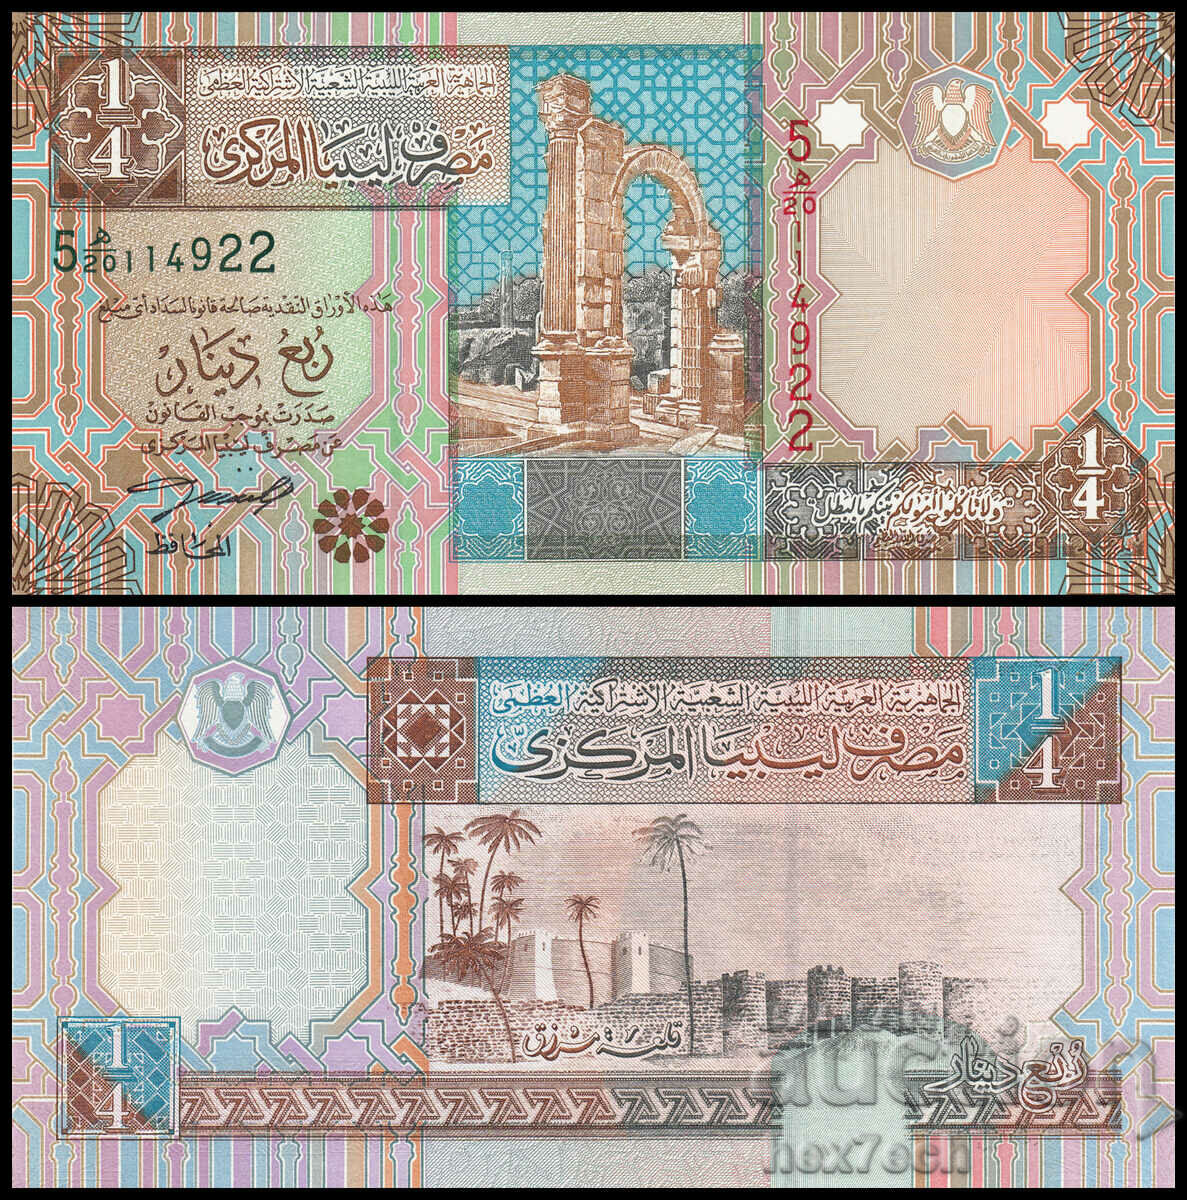 ❤️ ⭐ Libia 2002 1/4 dinar UNC nou ⭐ ❤️